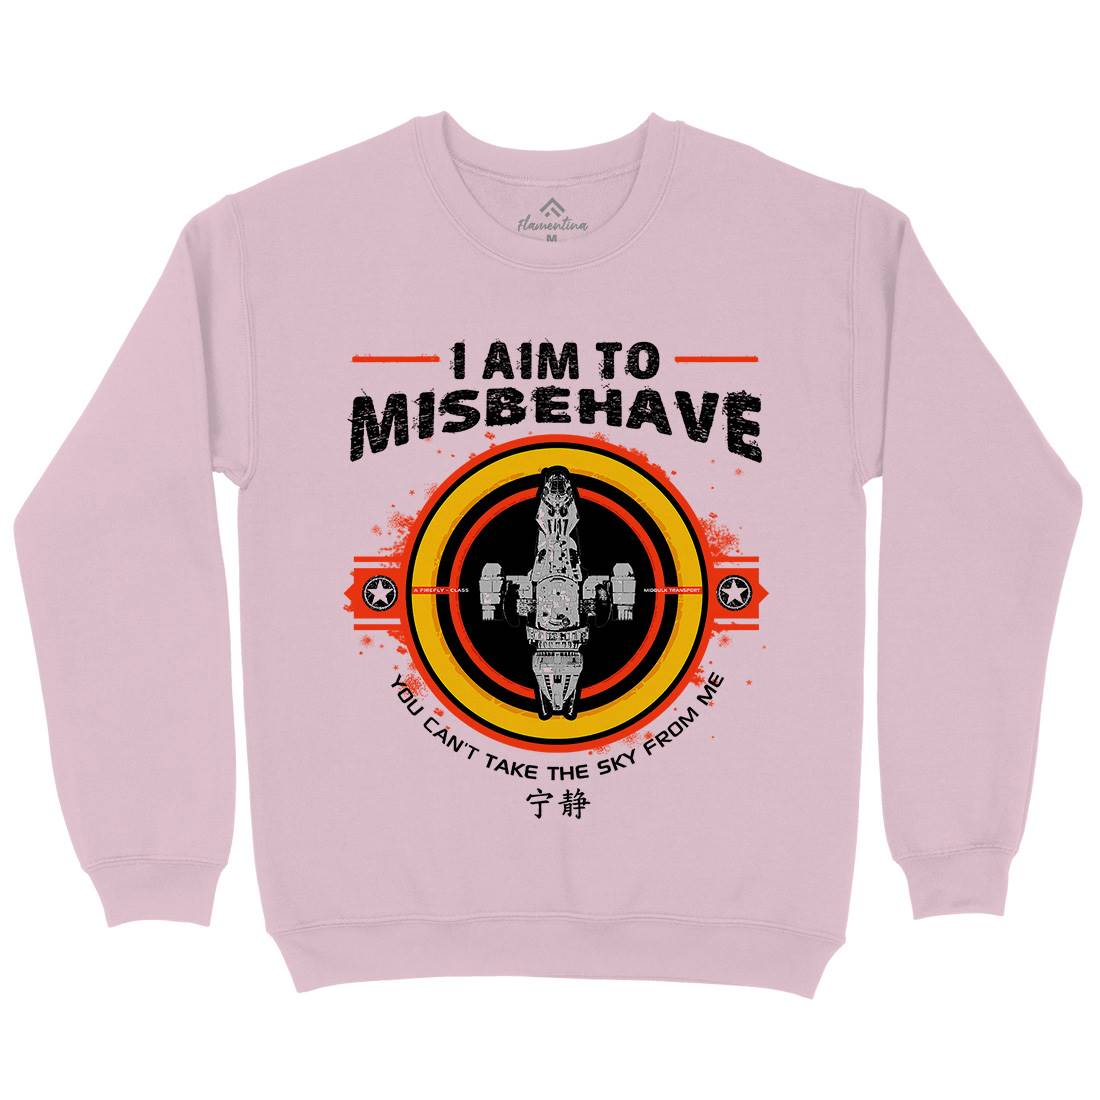 I Aim To Misbehave Kids Crew Neck Sweatshirt Space D352